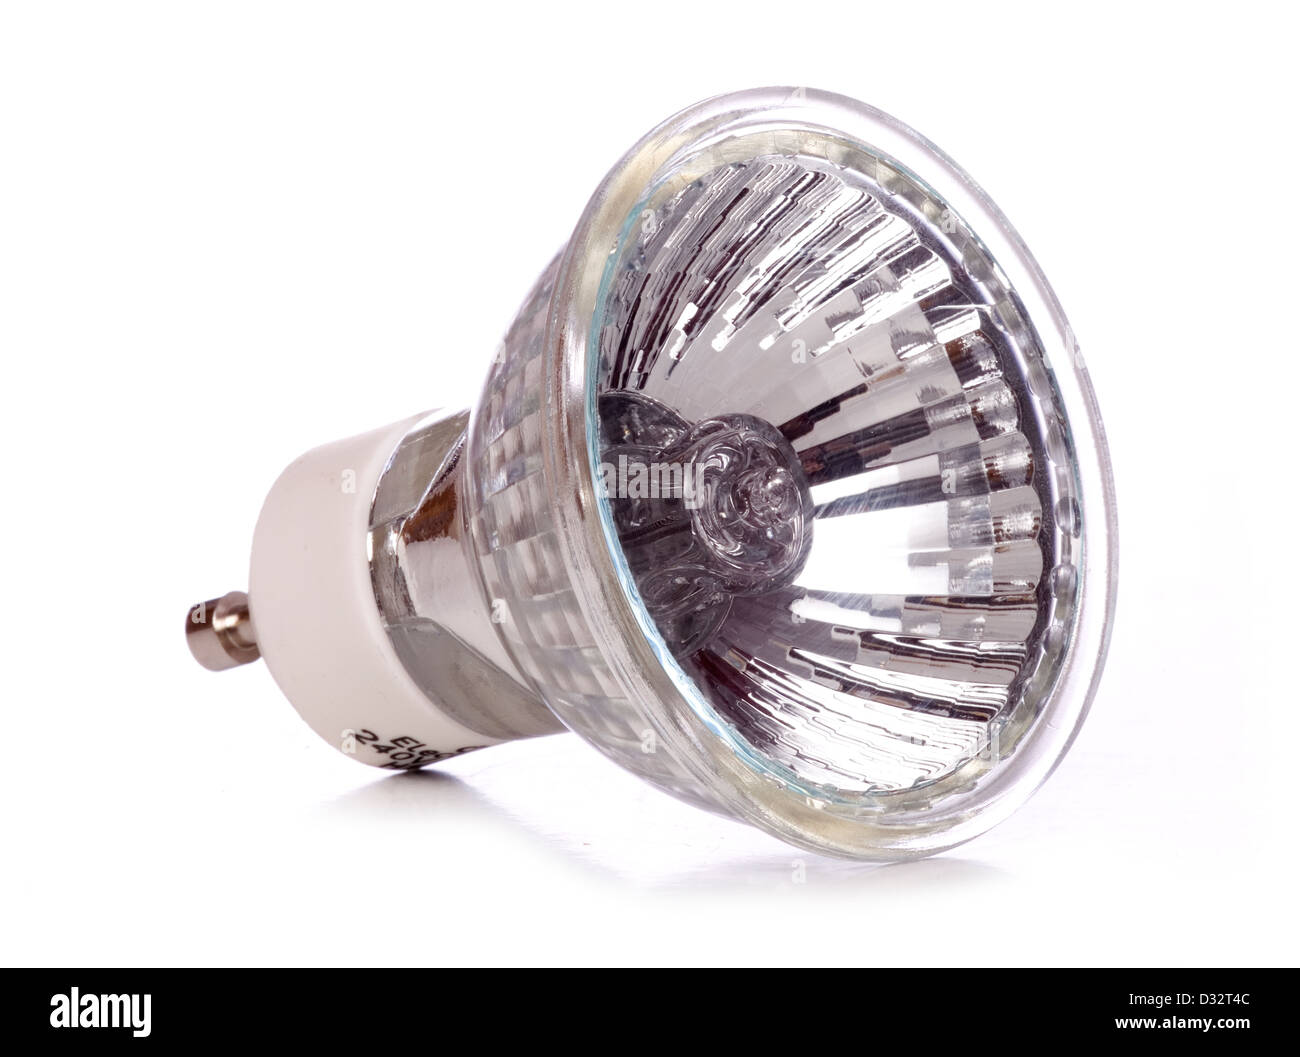 Halogen light bulb studio cutout Stock Photo